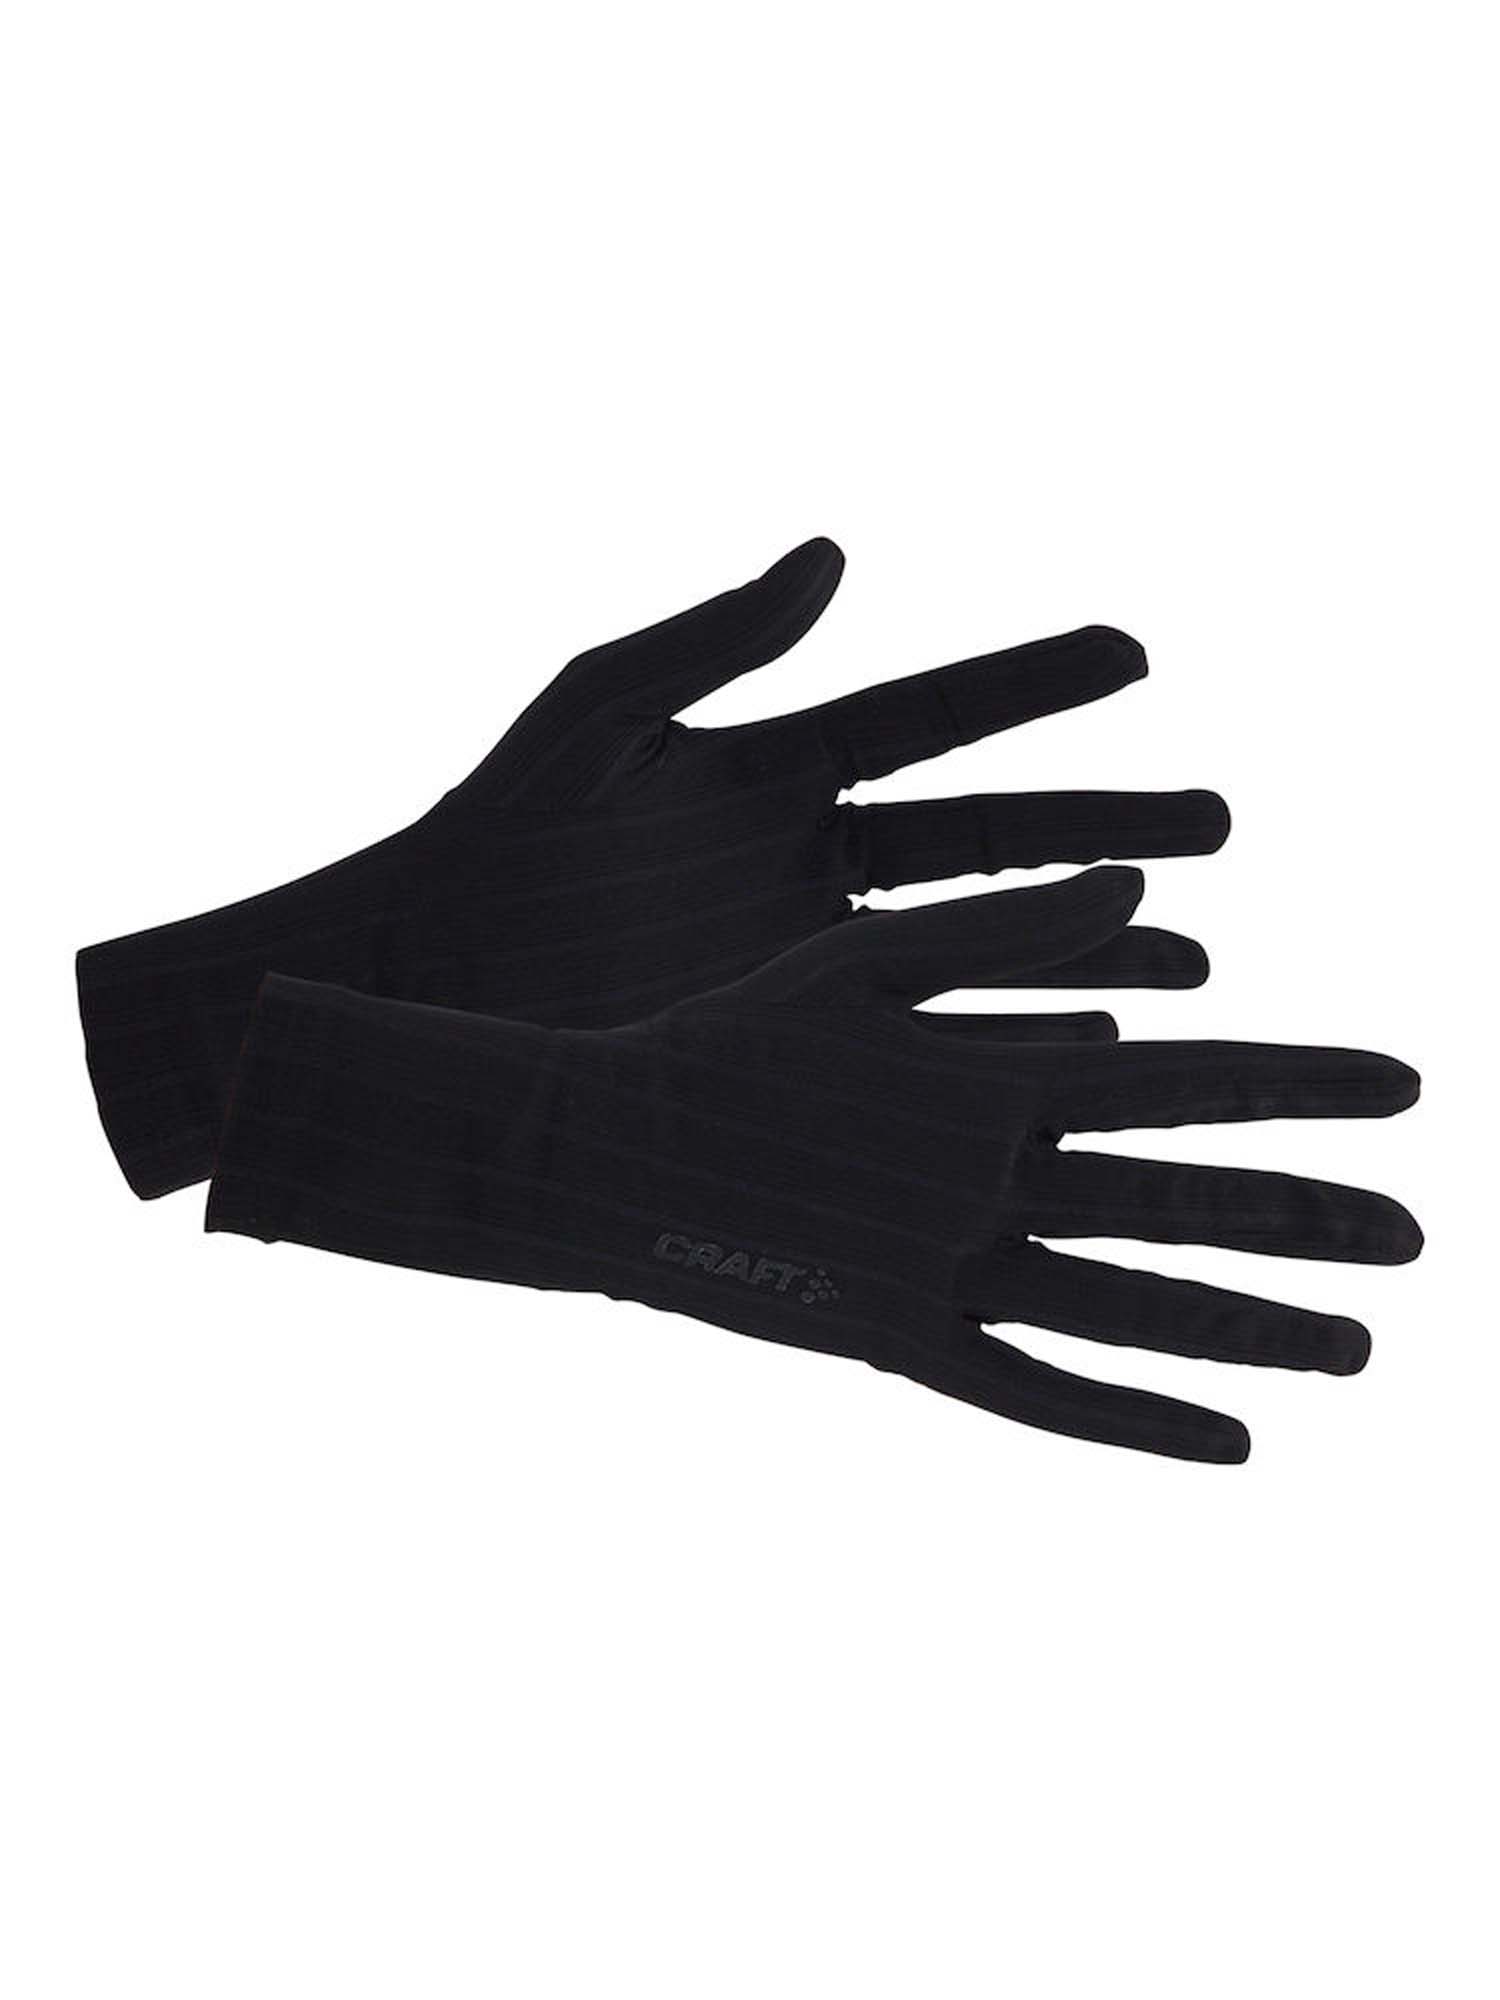 extreme3 2.0 glove liner